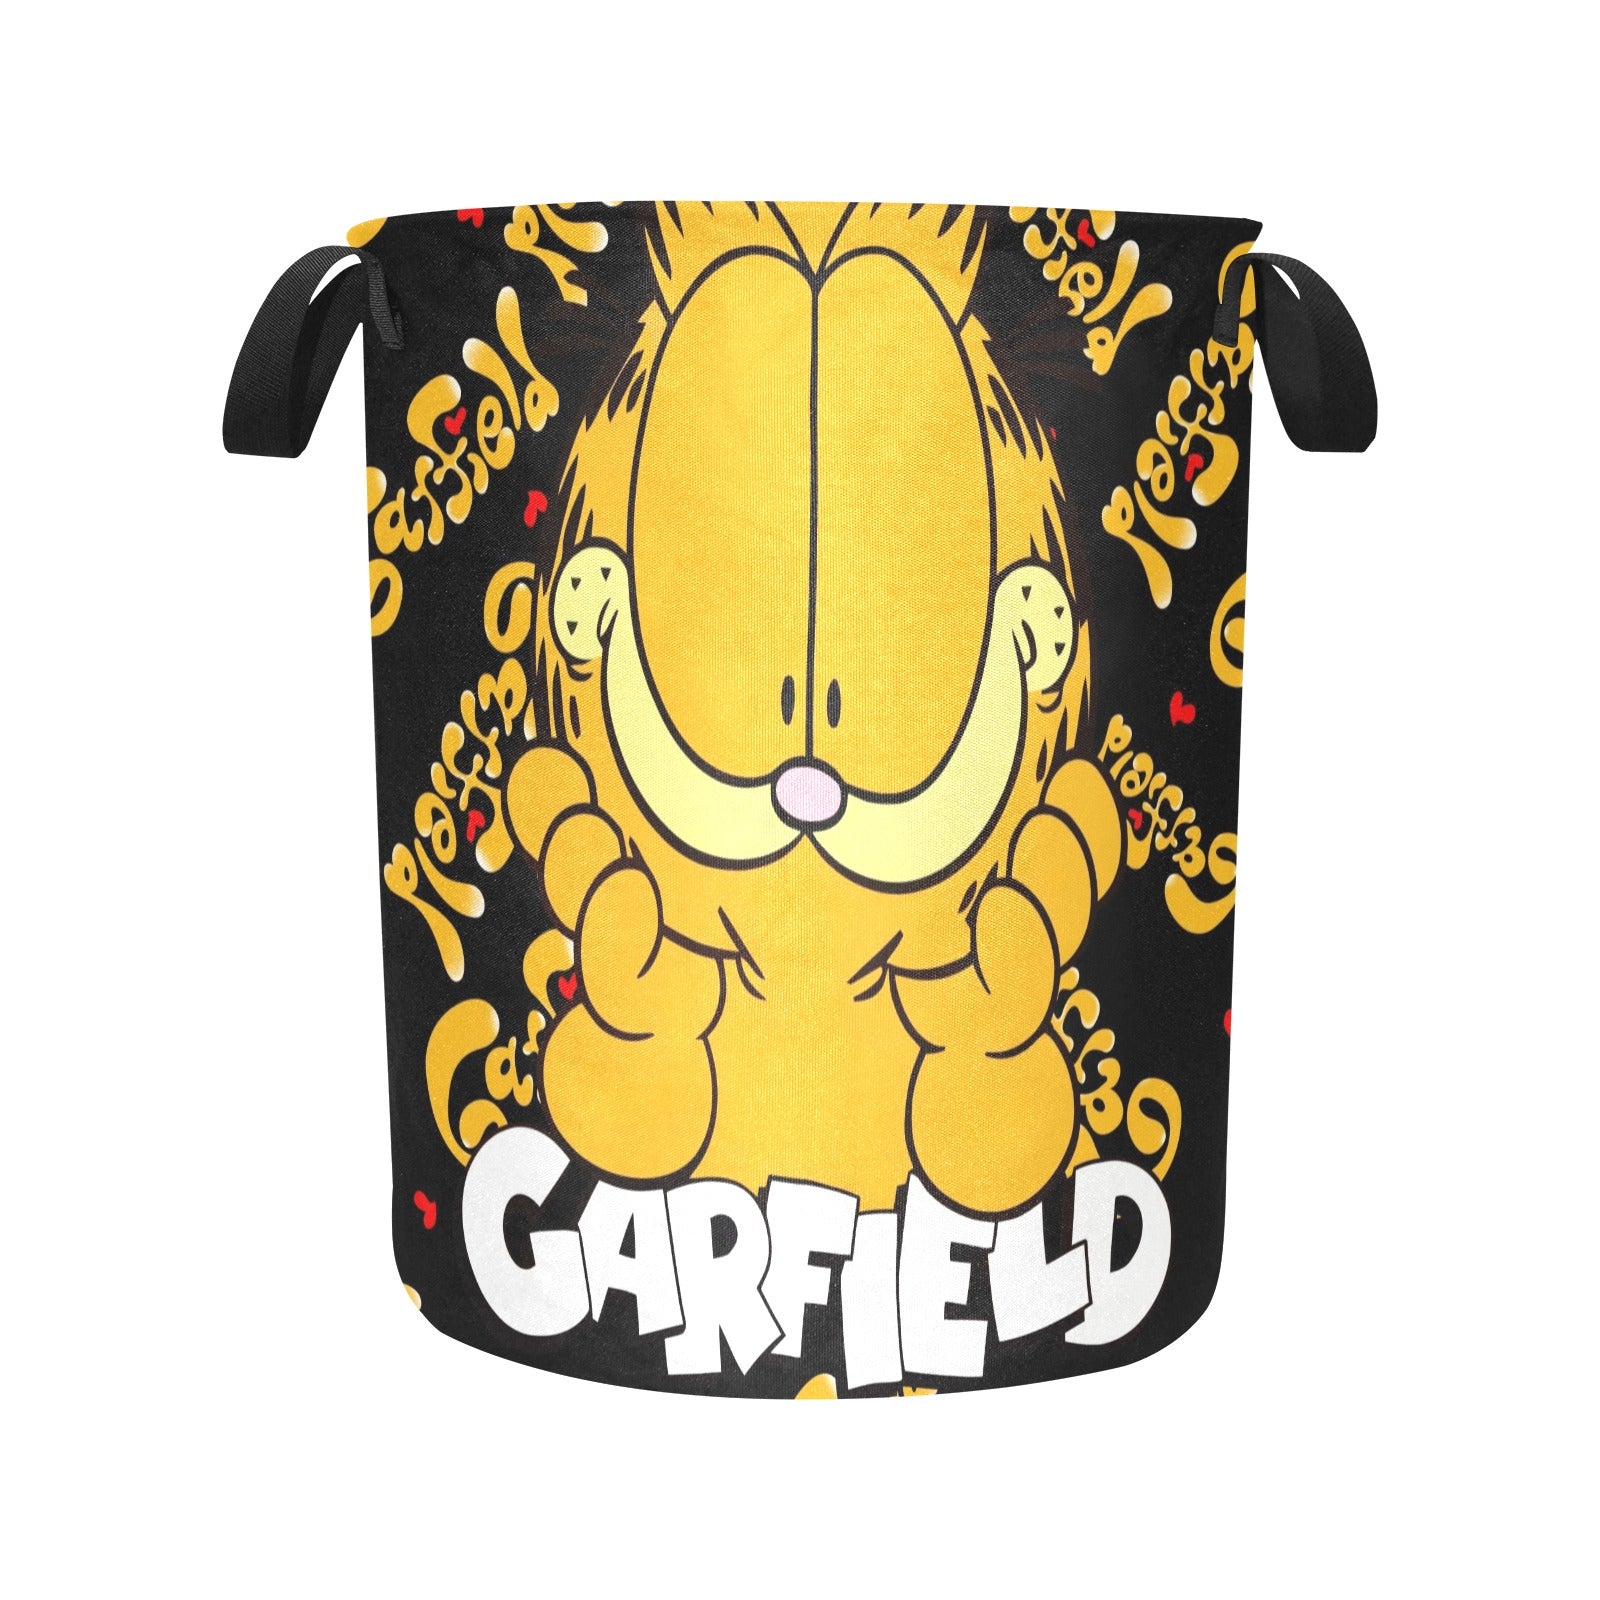 Garfield 3 Laundry Bag - Laundry Bag (Large) - Zanlana Design and Home Decor